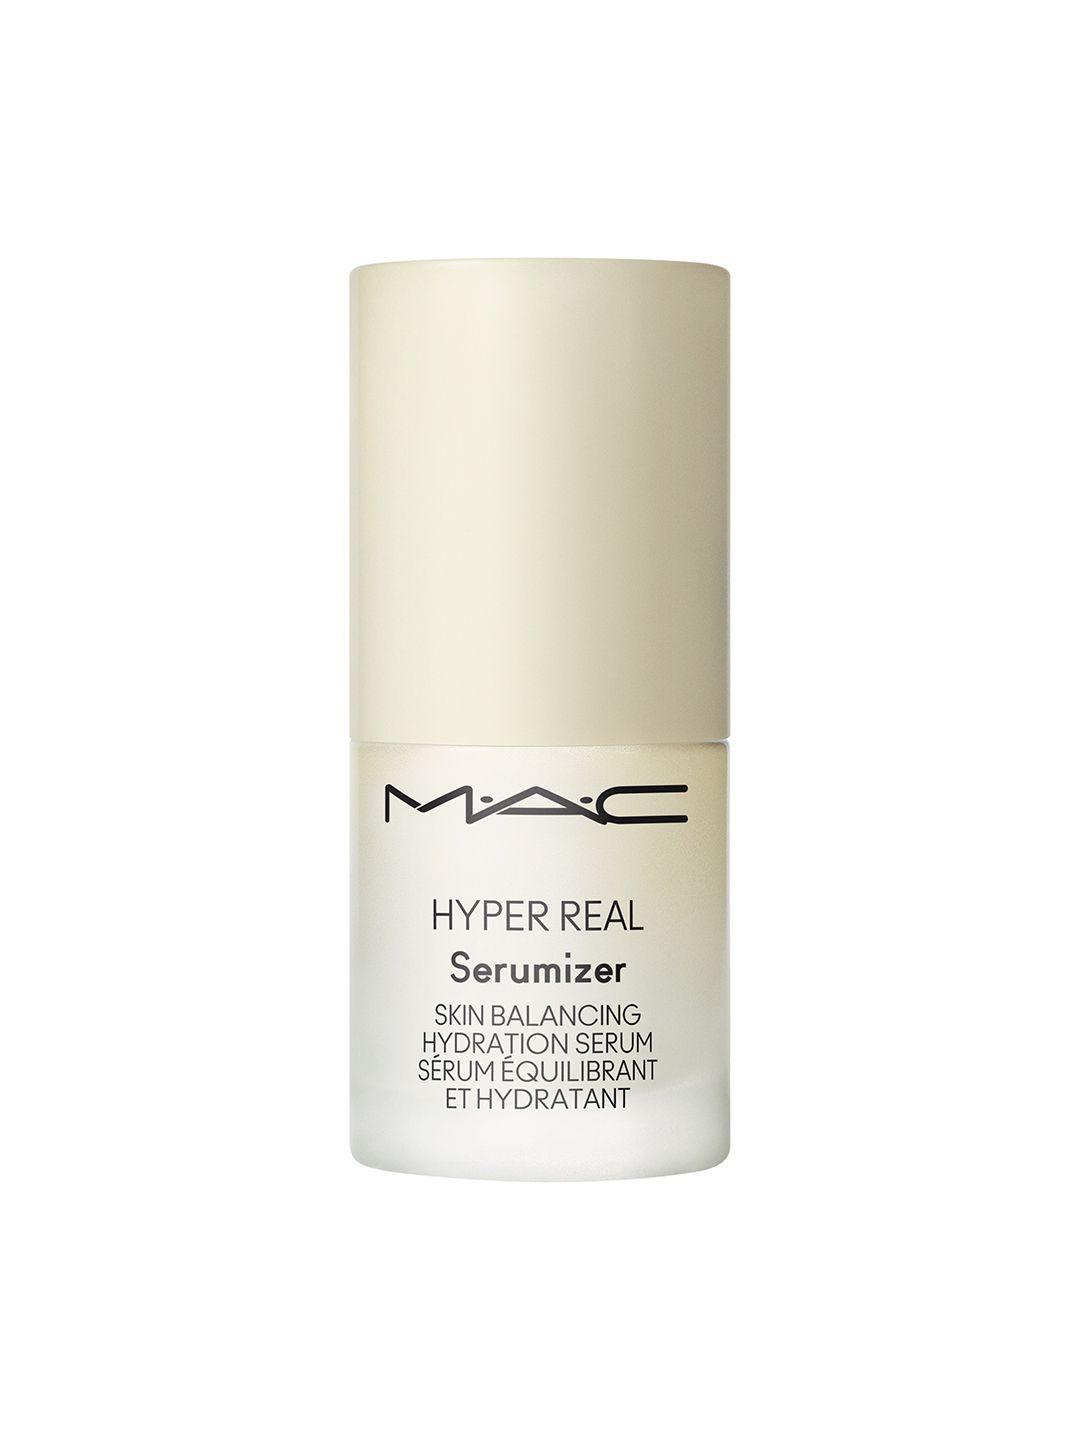 m.a.c hyper real serumizer for skin balancing - 15 ml